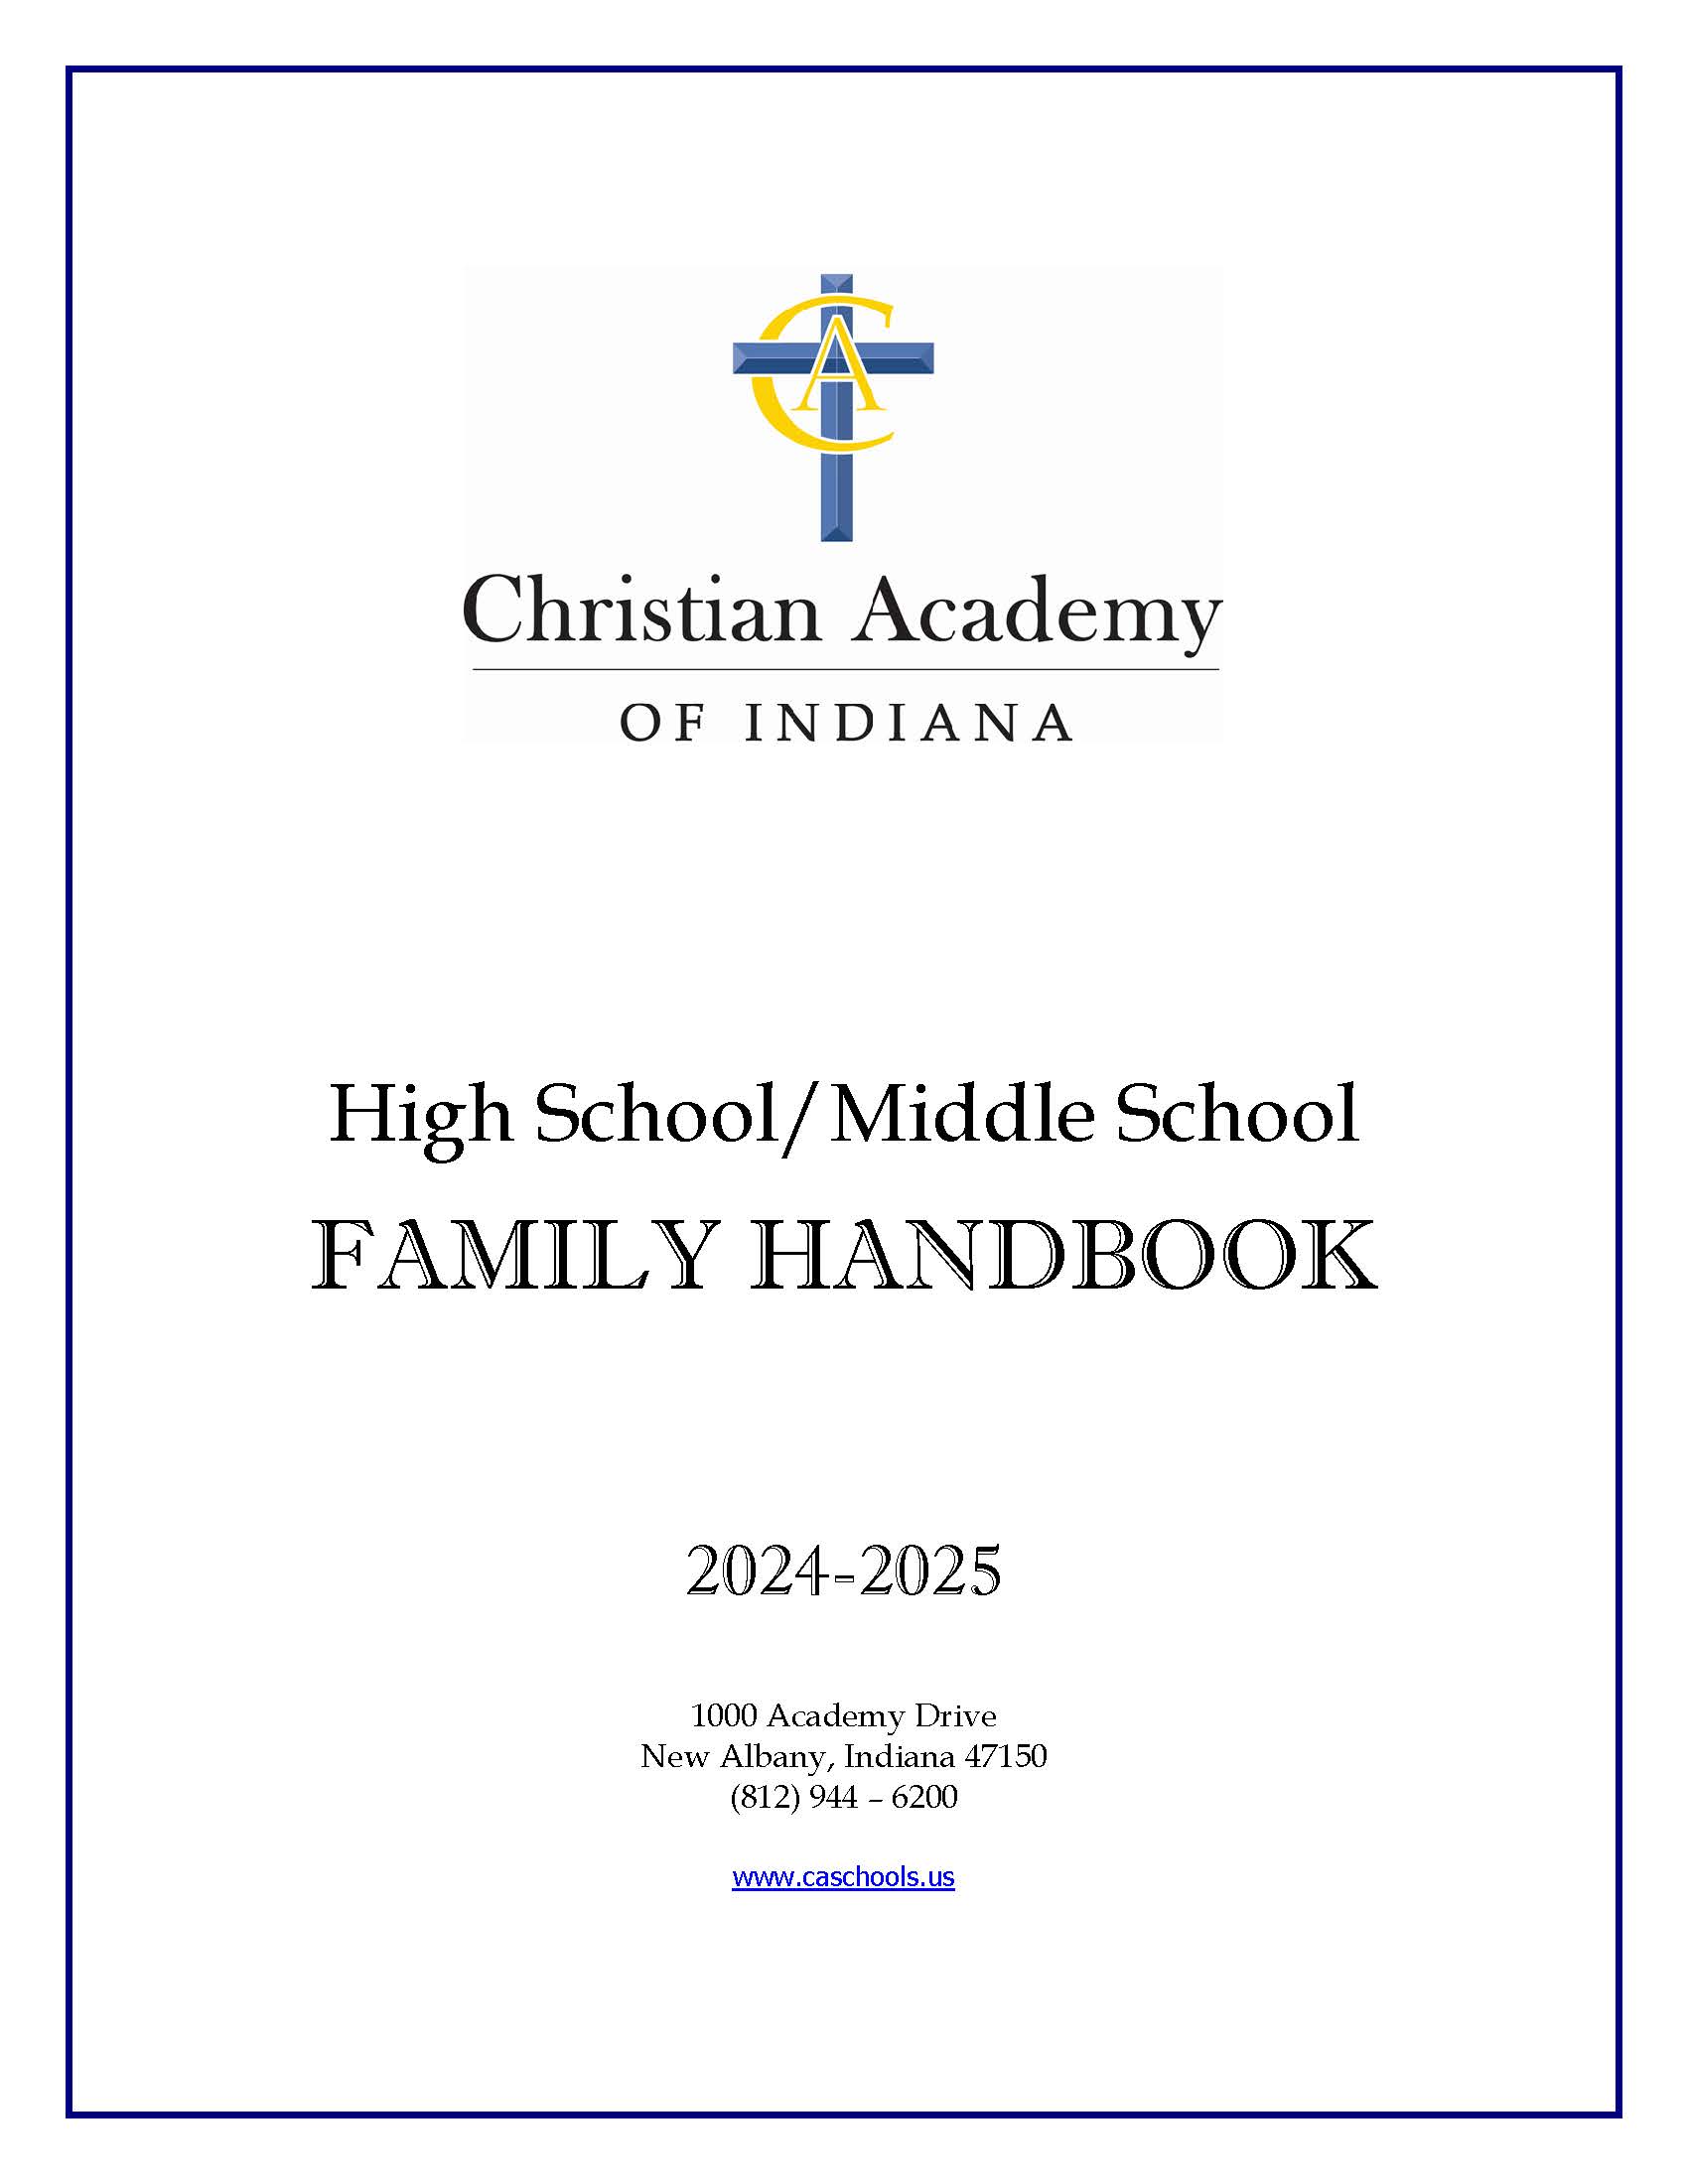 Christian Academy School System | Christian Academy of Indiana | High School / Middle School | 2024-2025 Handbook